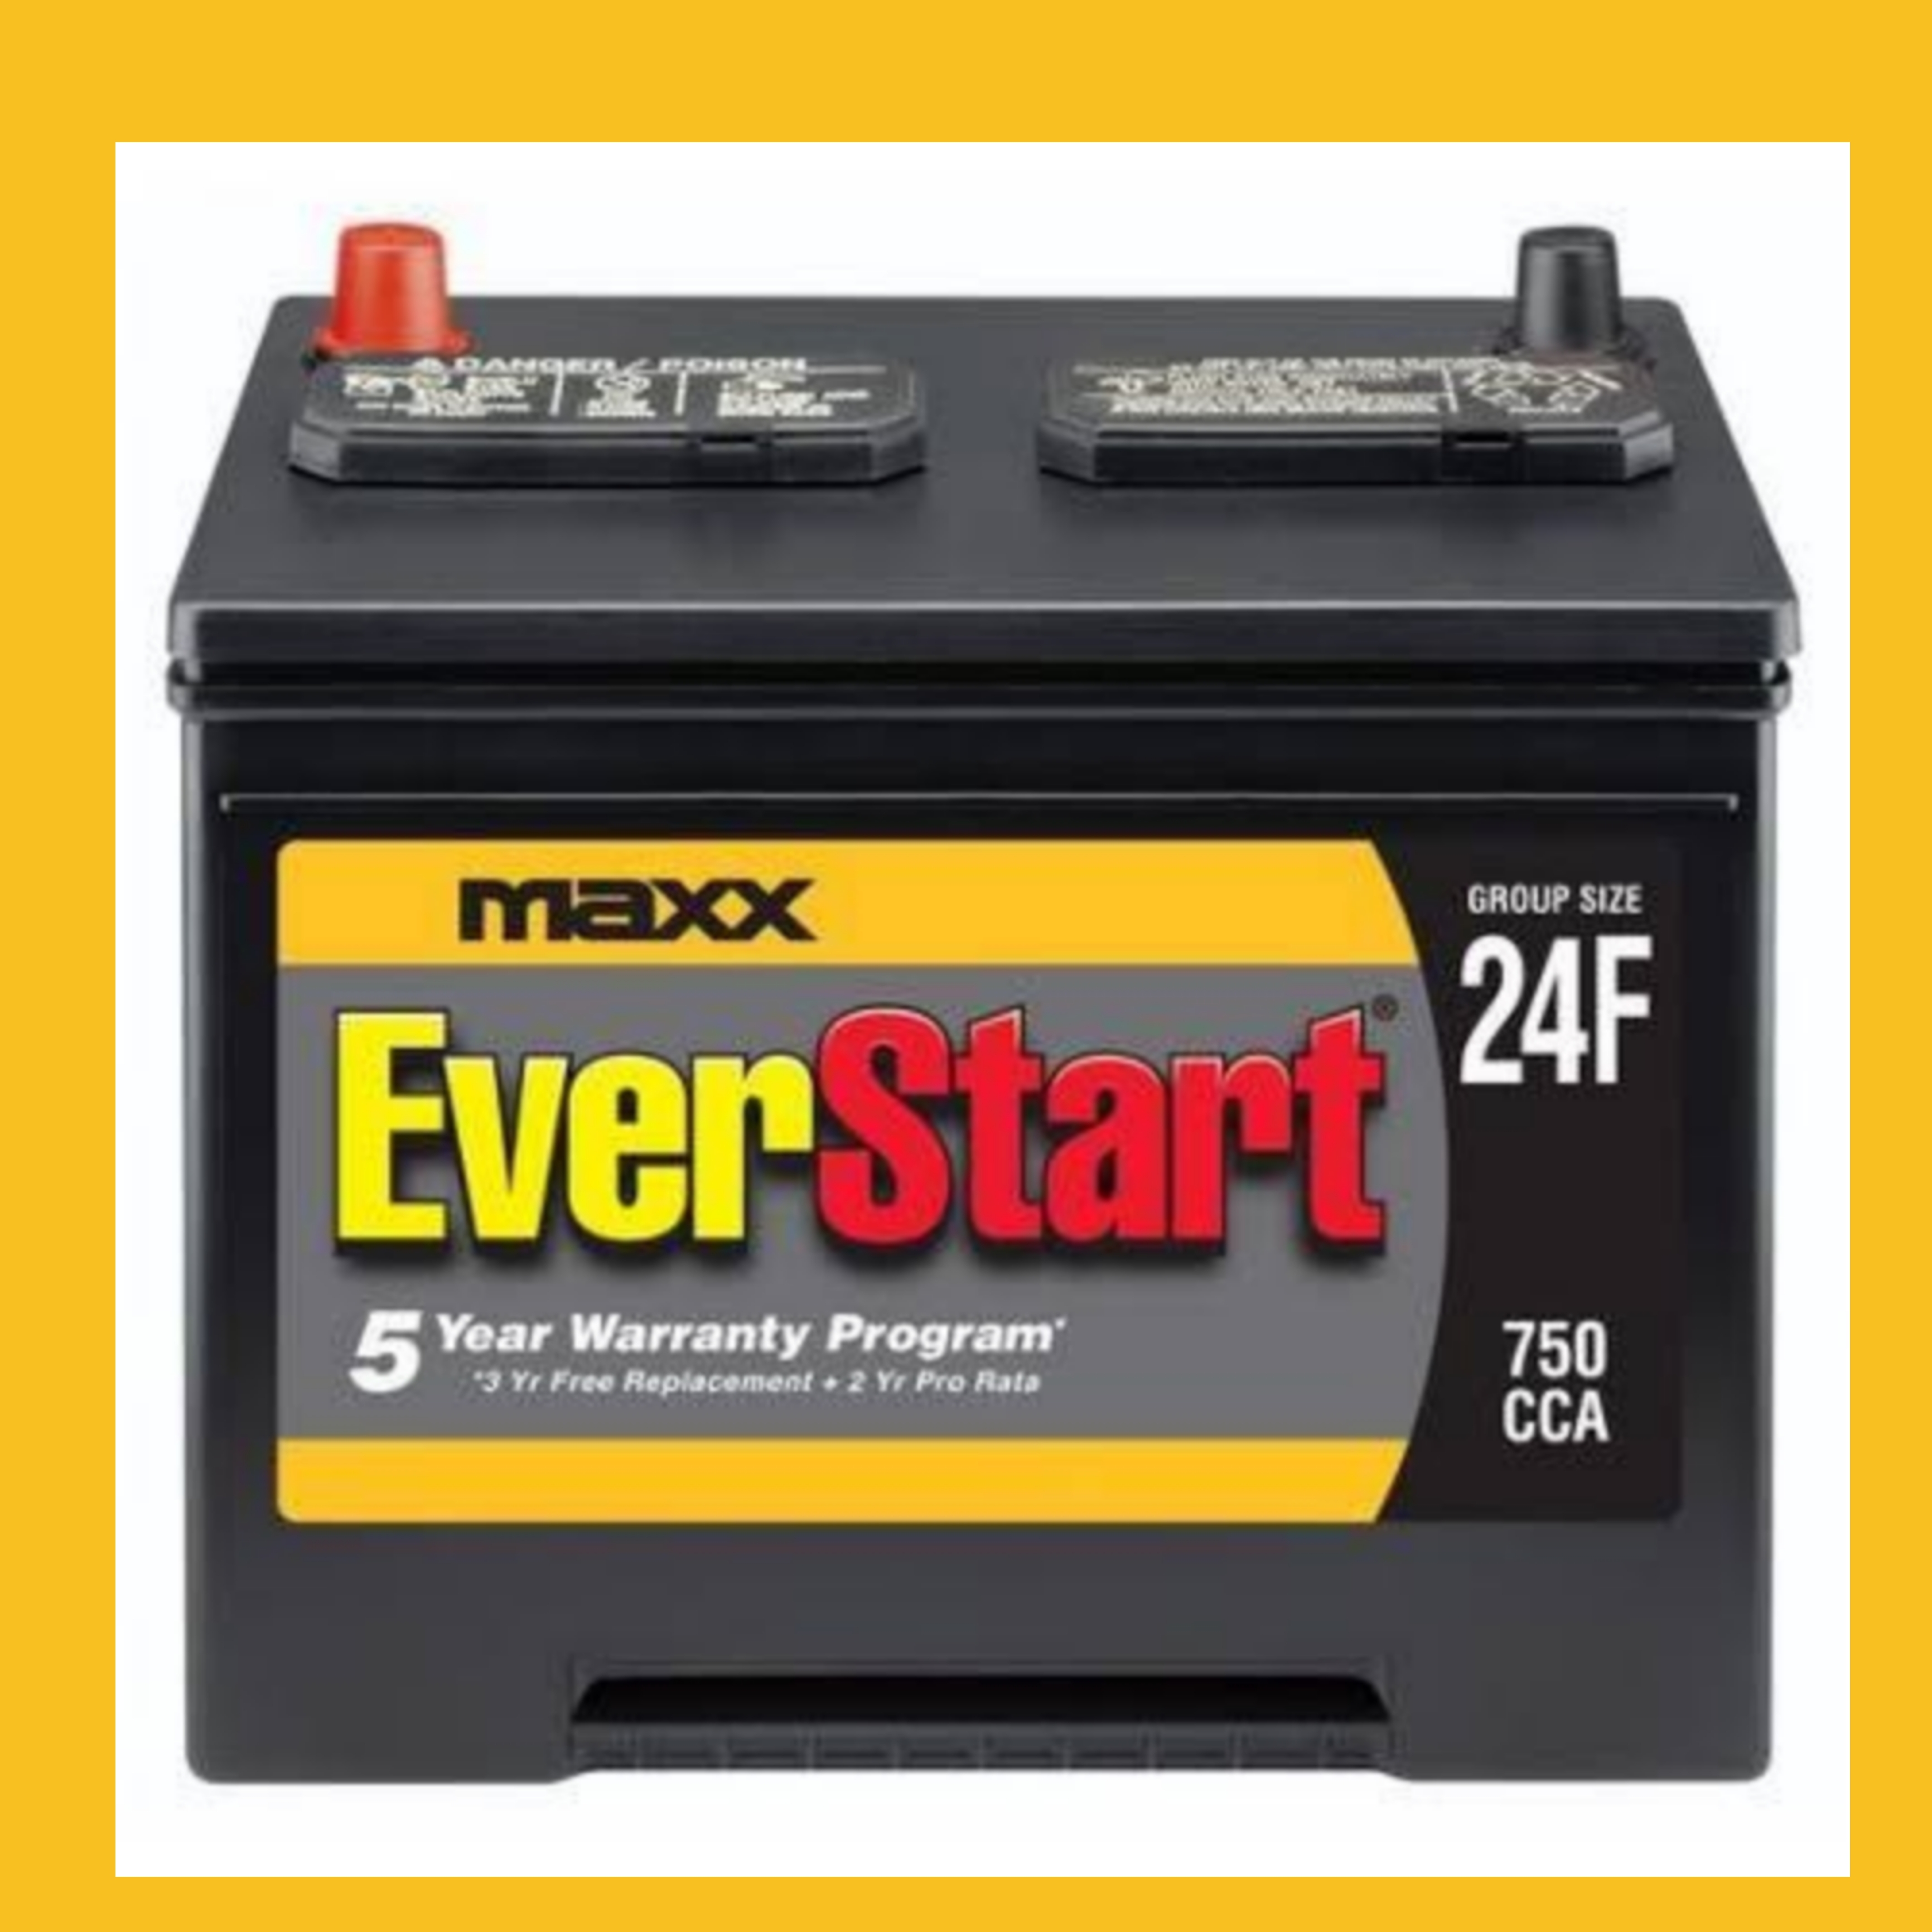 Battery limited. Everstart lead acid Marine starting Battery, Group Size 24ms - 1000 MCA (12 Volt/1000 MCA). АКБ everstart es20lbs. 24f АКБ. HQF Maxx аккумулятор.